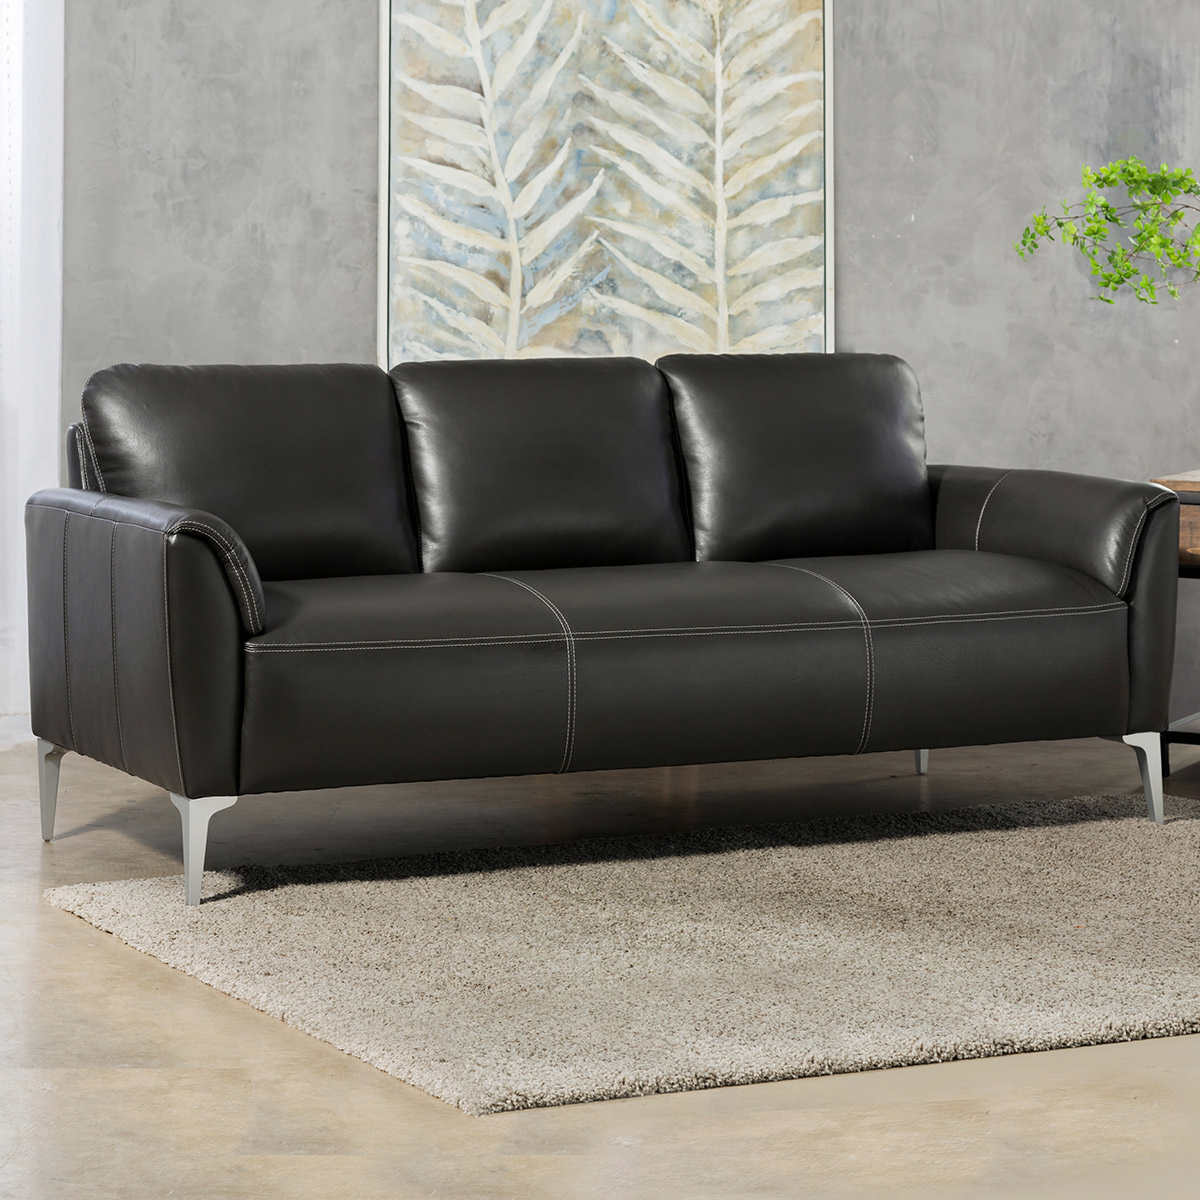 Jordane Leather Sofa Costco, Leather Sectional Costco